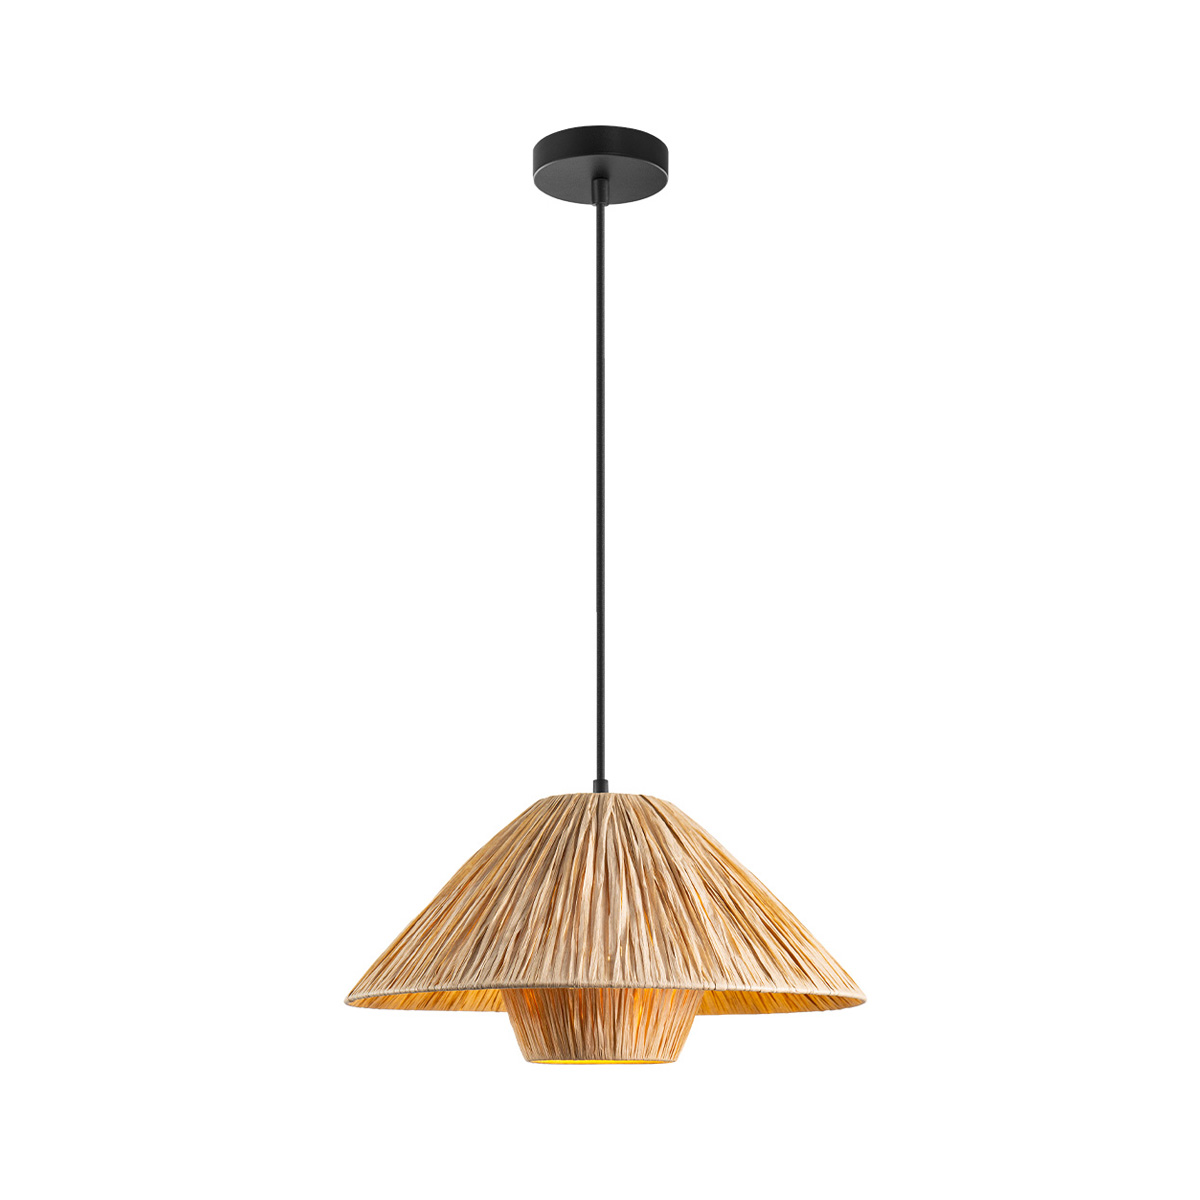 Tangla lighting - TLP7437-01NB - pendant lamp 1 Light - sea grass - sand black + natural - hat